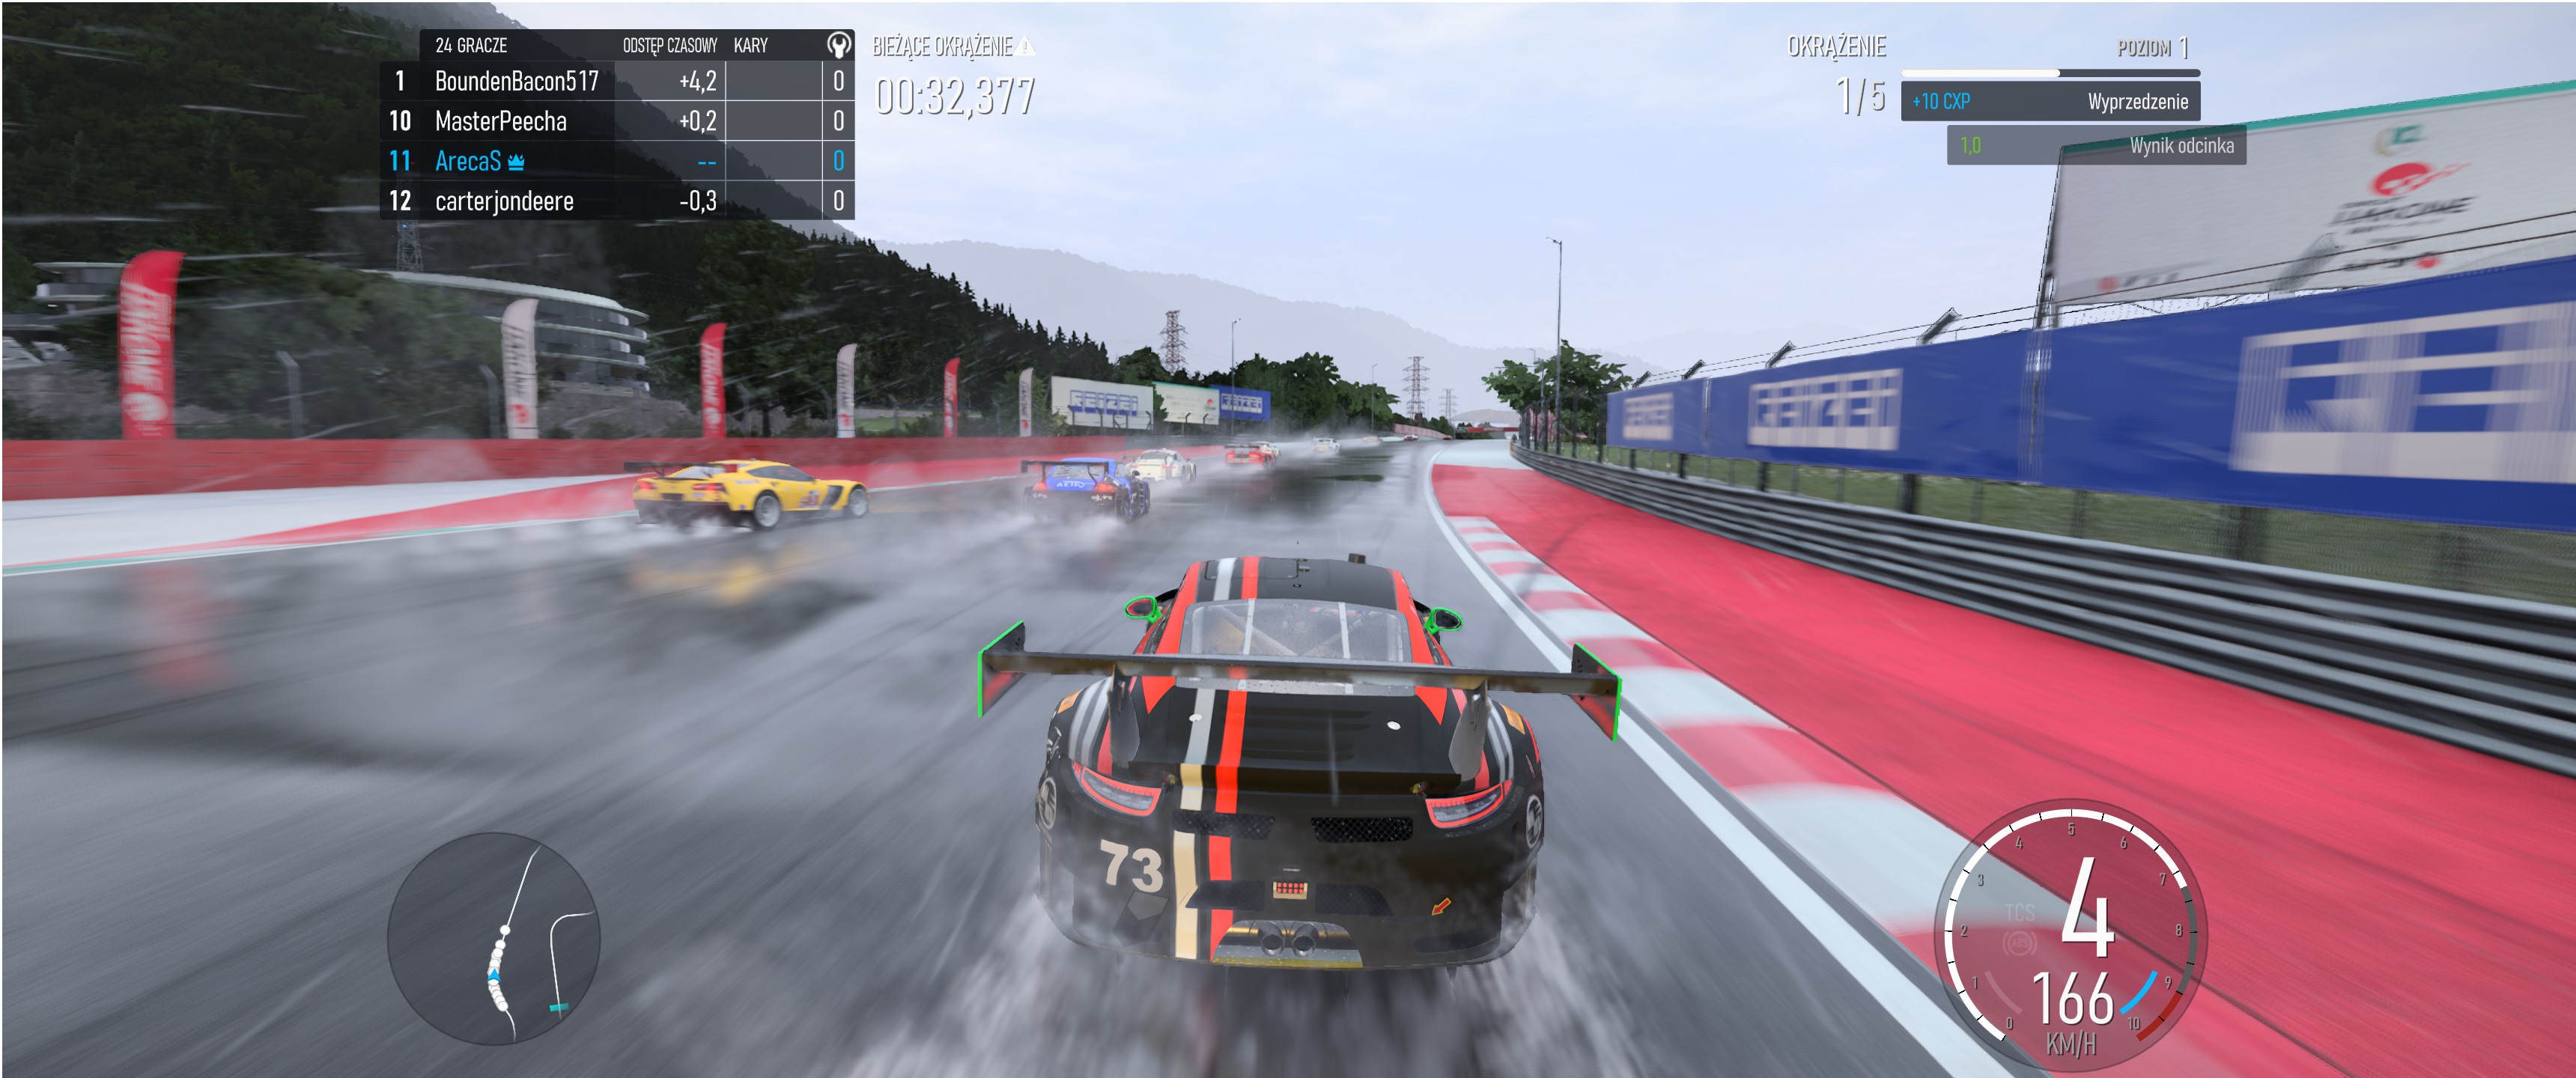 Forza Motorsport - recenzja